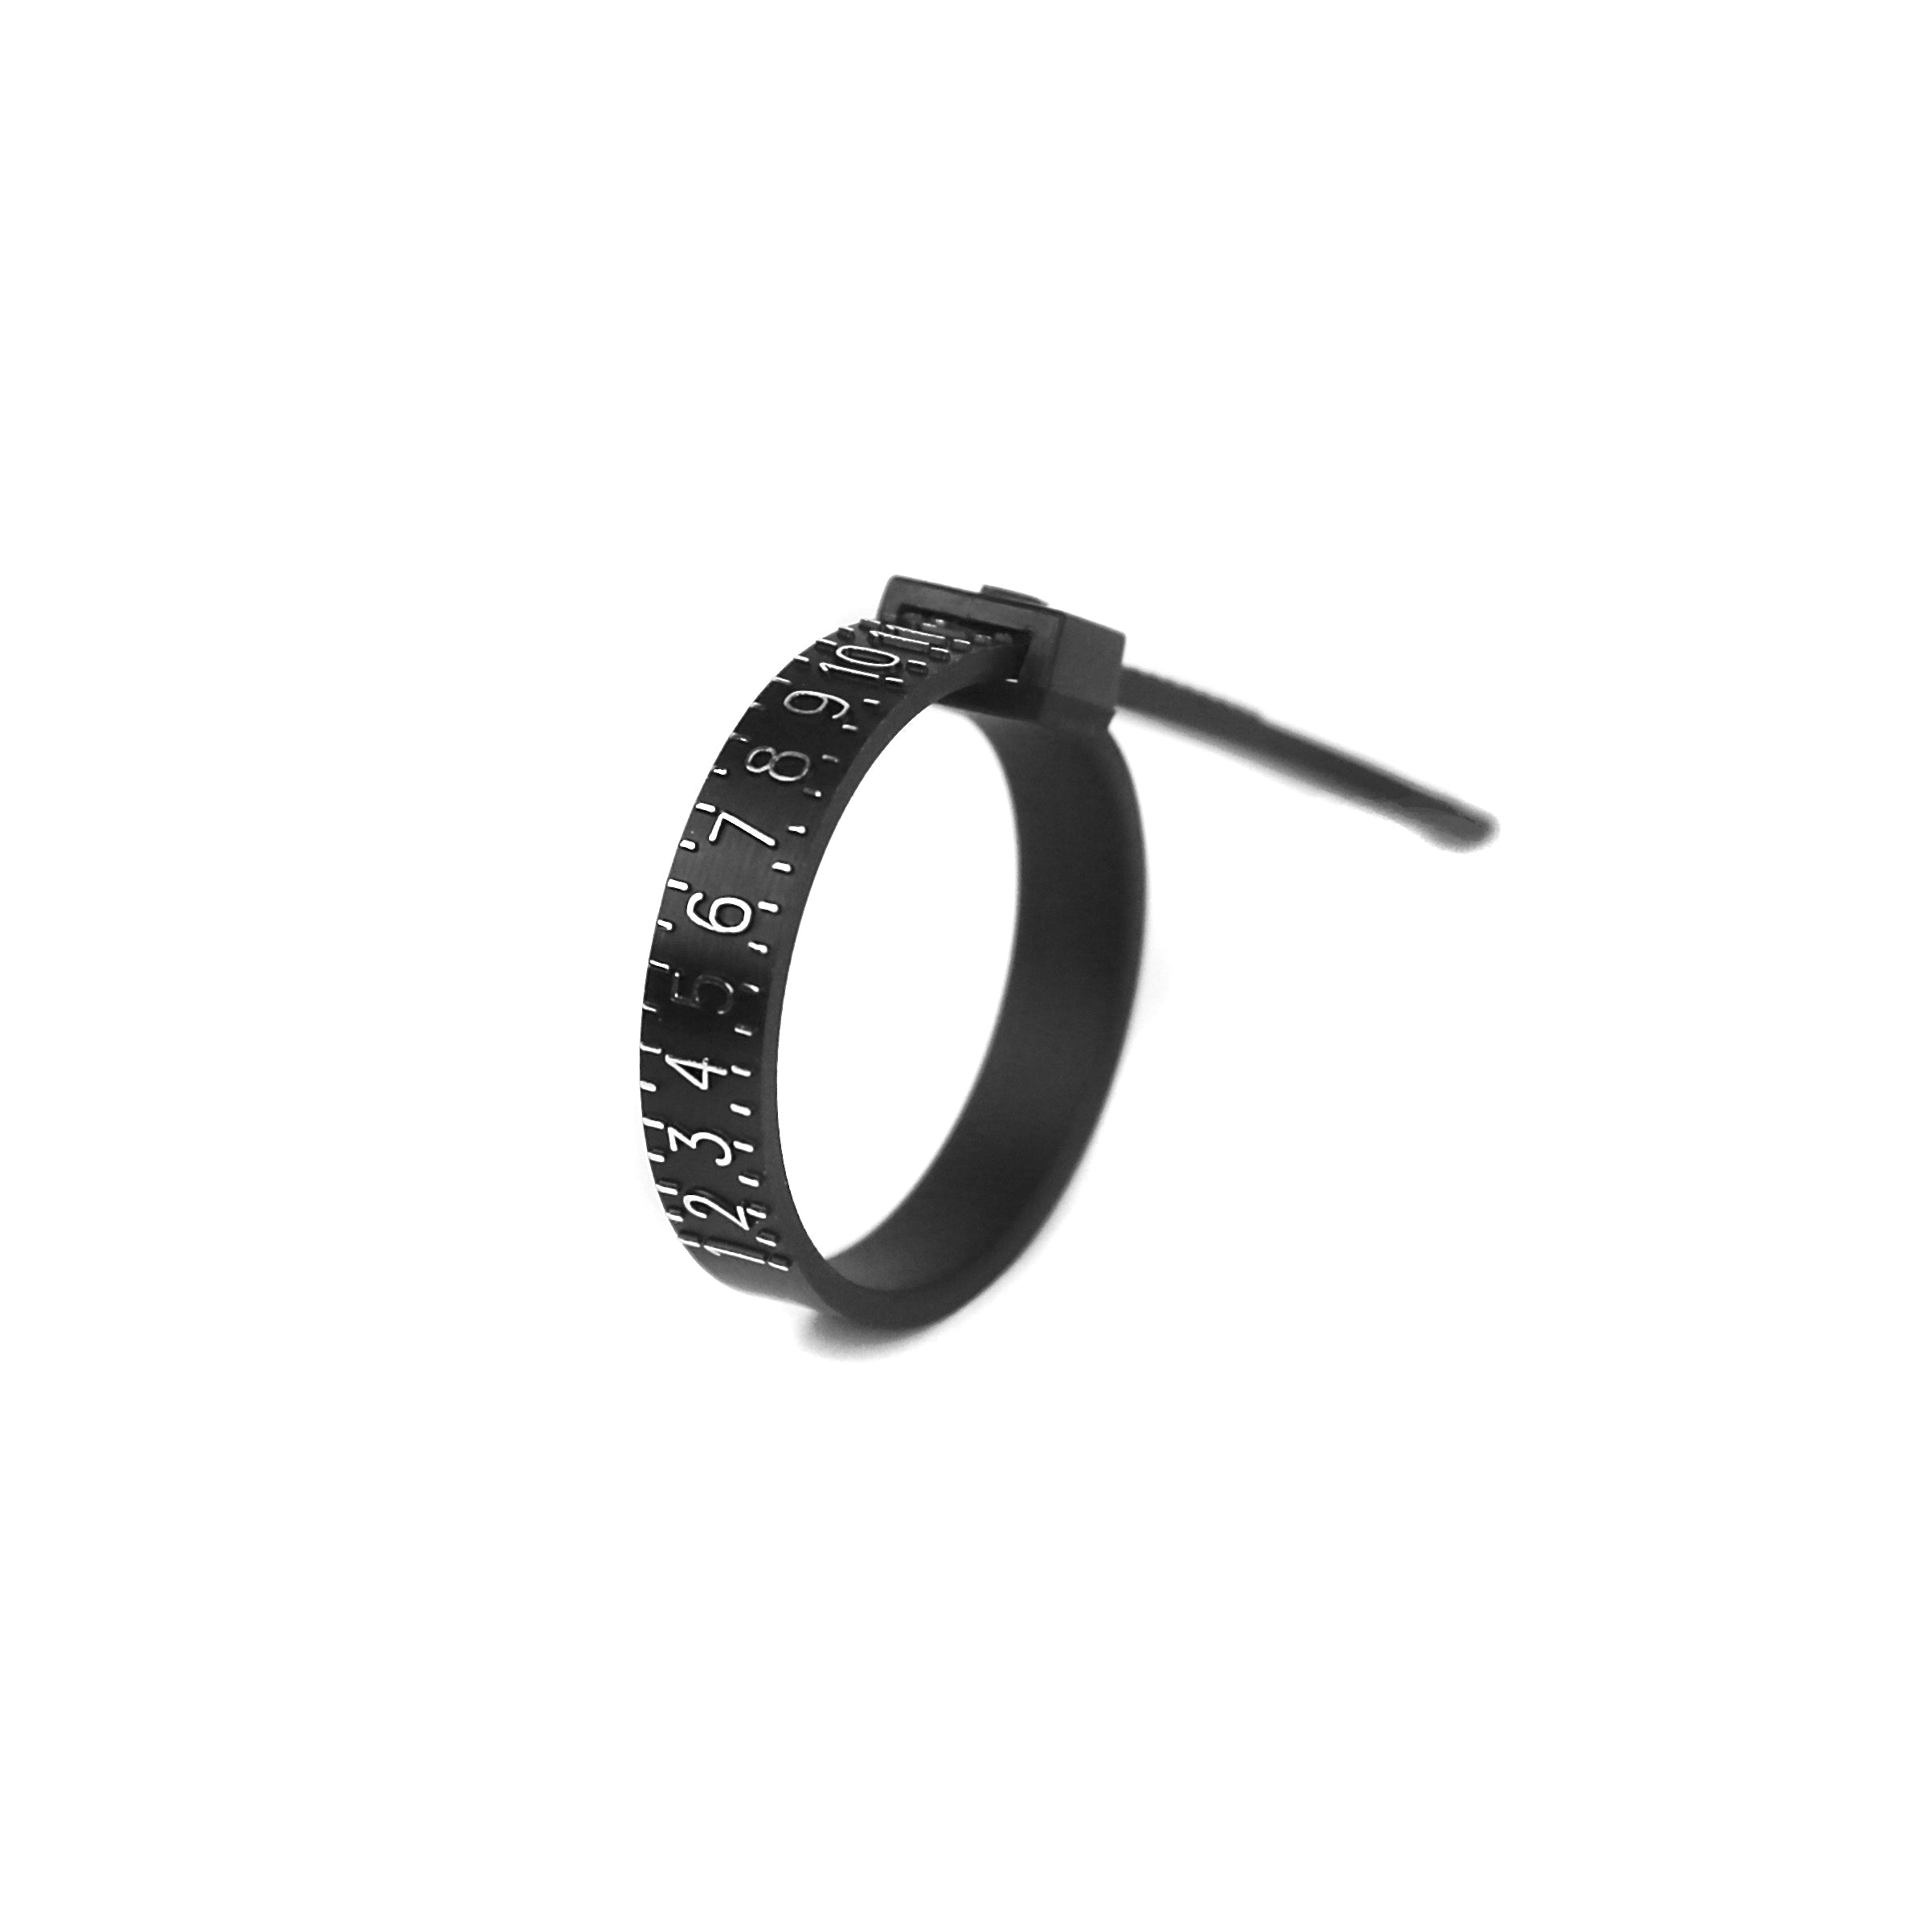 Ring Sizer - Black Plastic